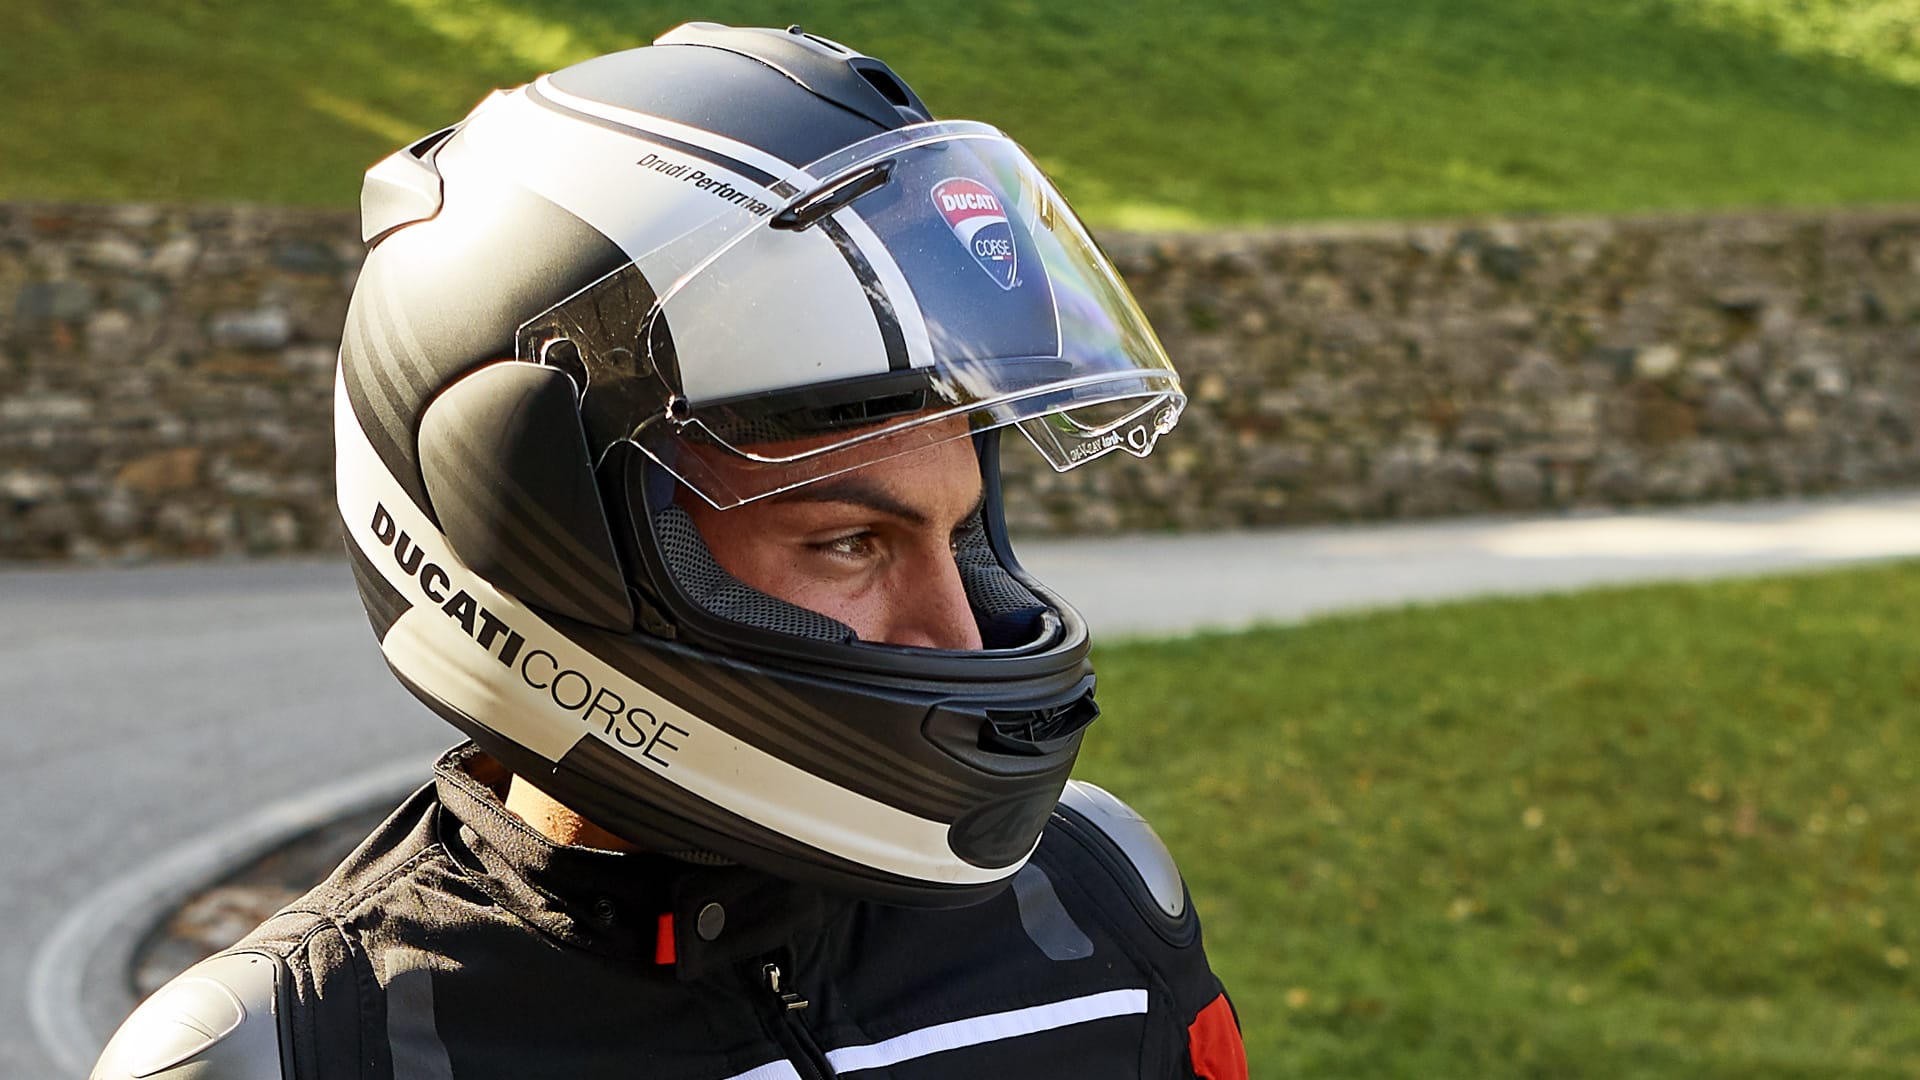 Carbon Fiber Motorcycle Helmet - Top 8 Best Choices